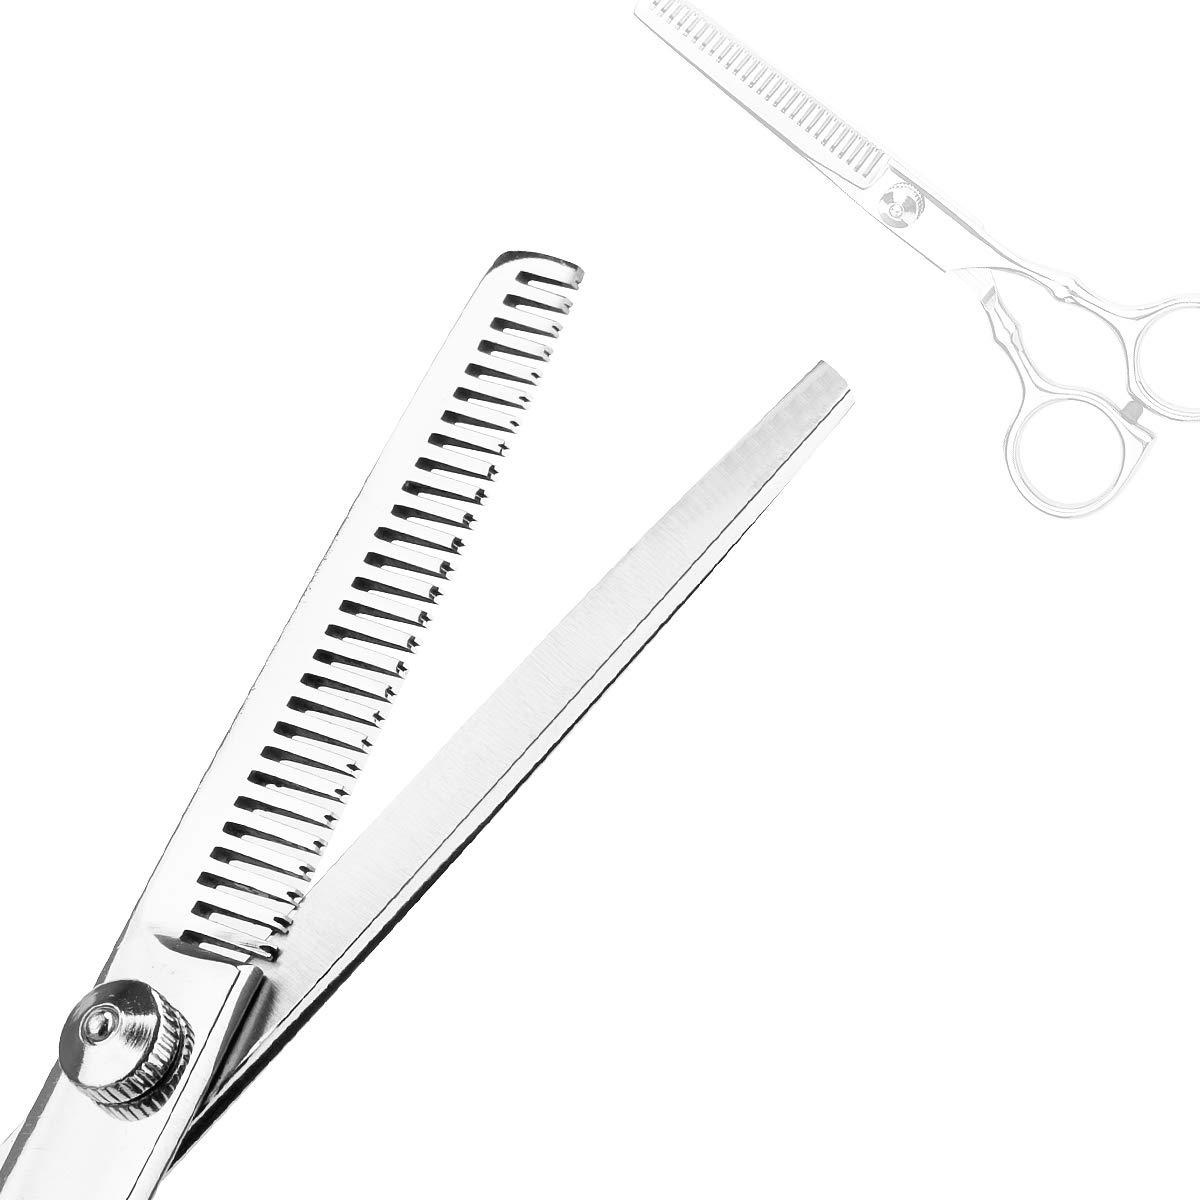 Silver Personal Hygiene Kit Bathroom Scissors Stock Photo 21490480